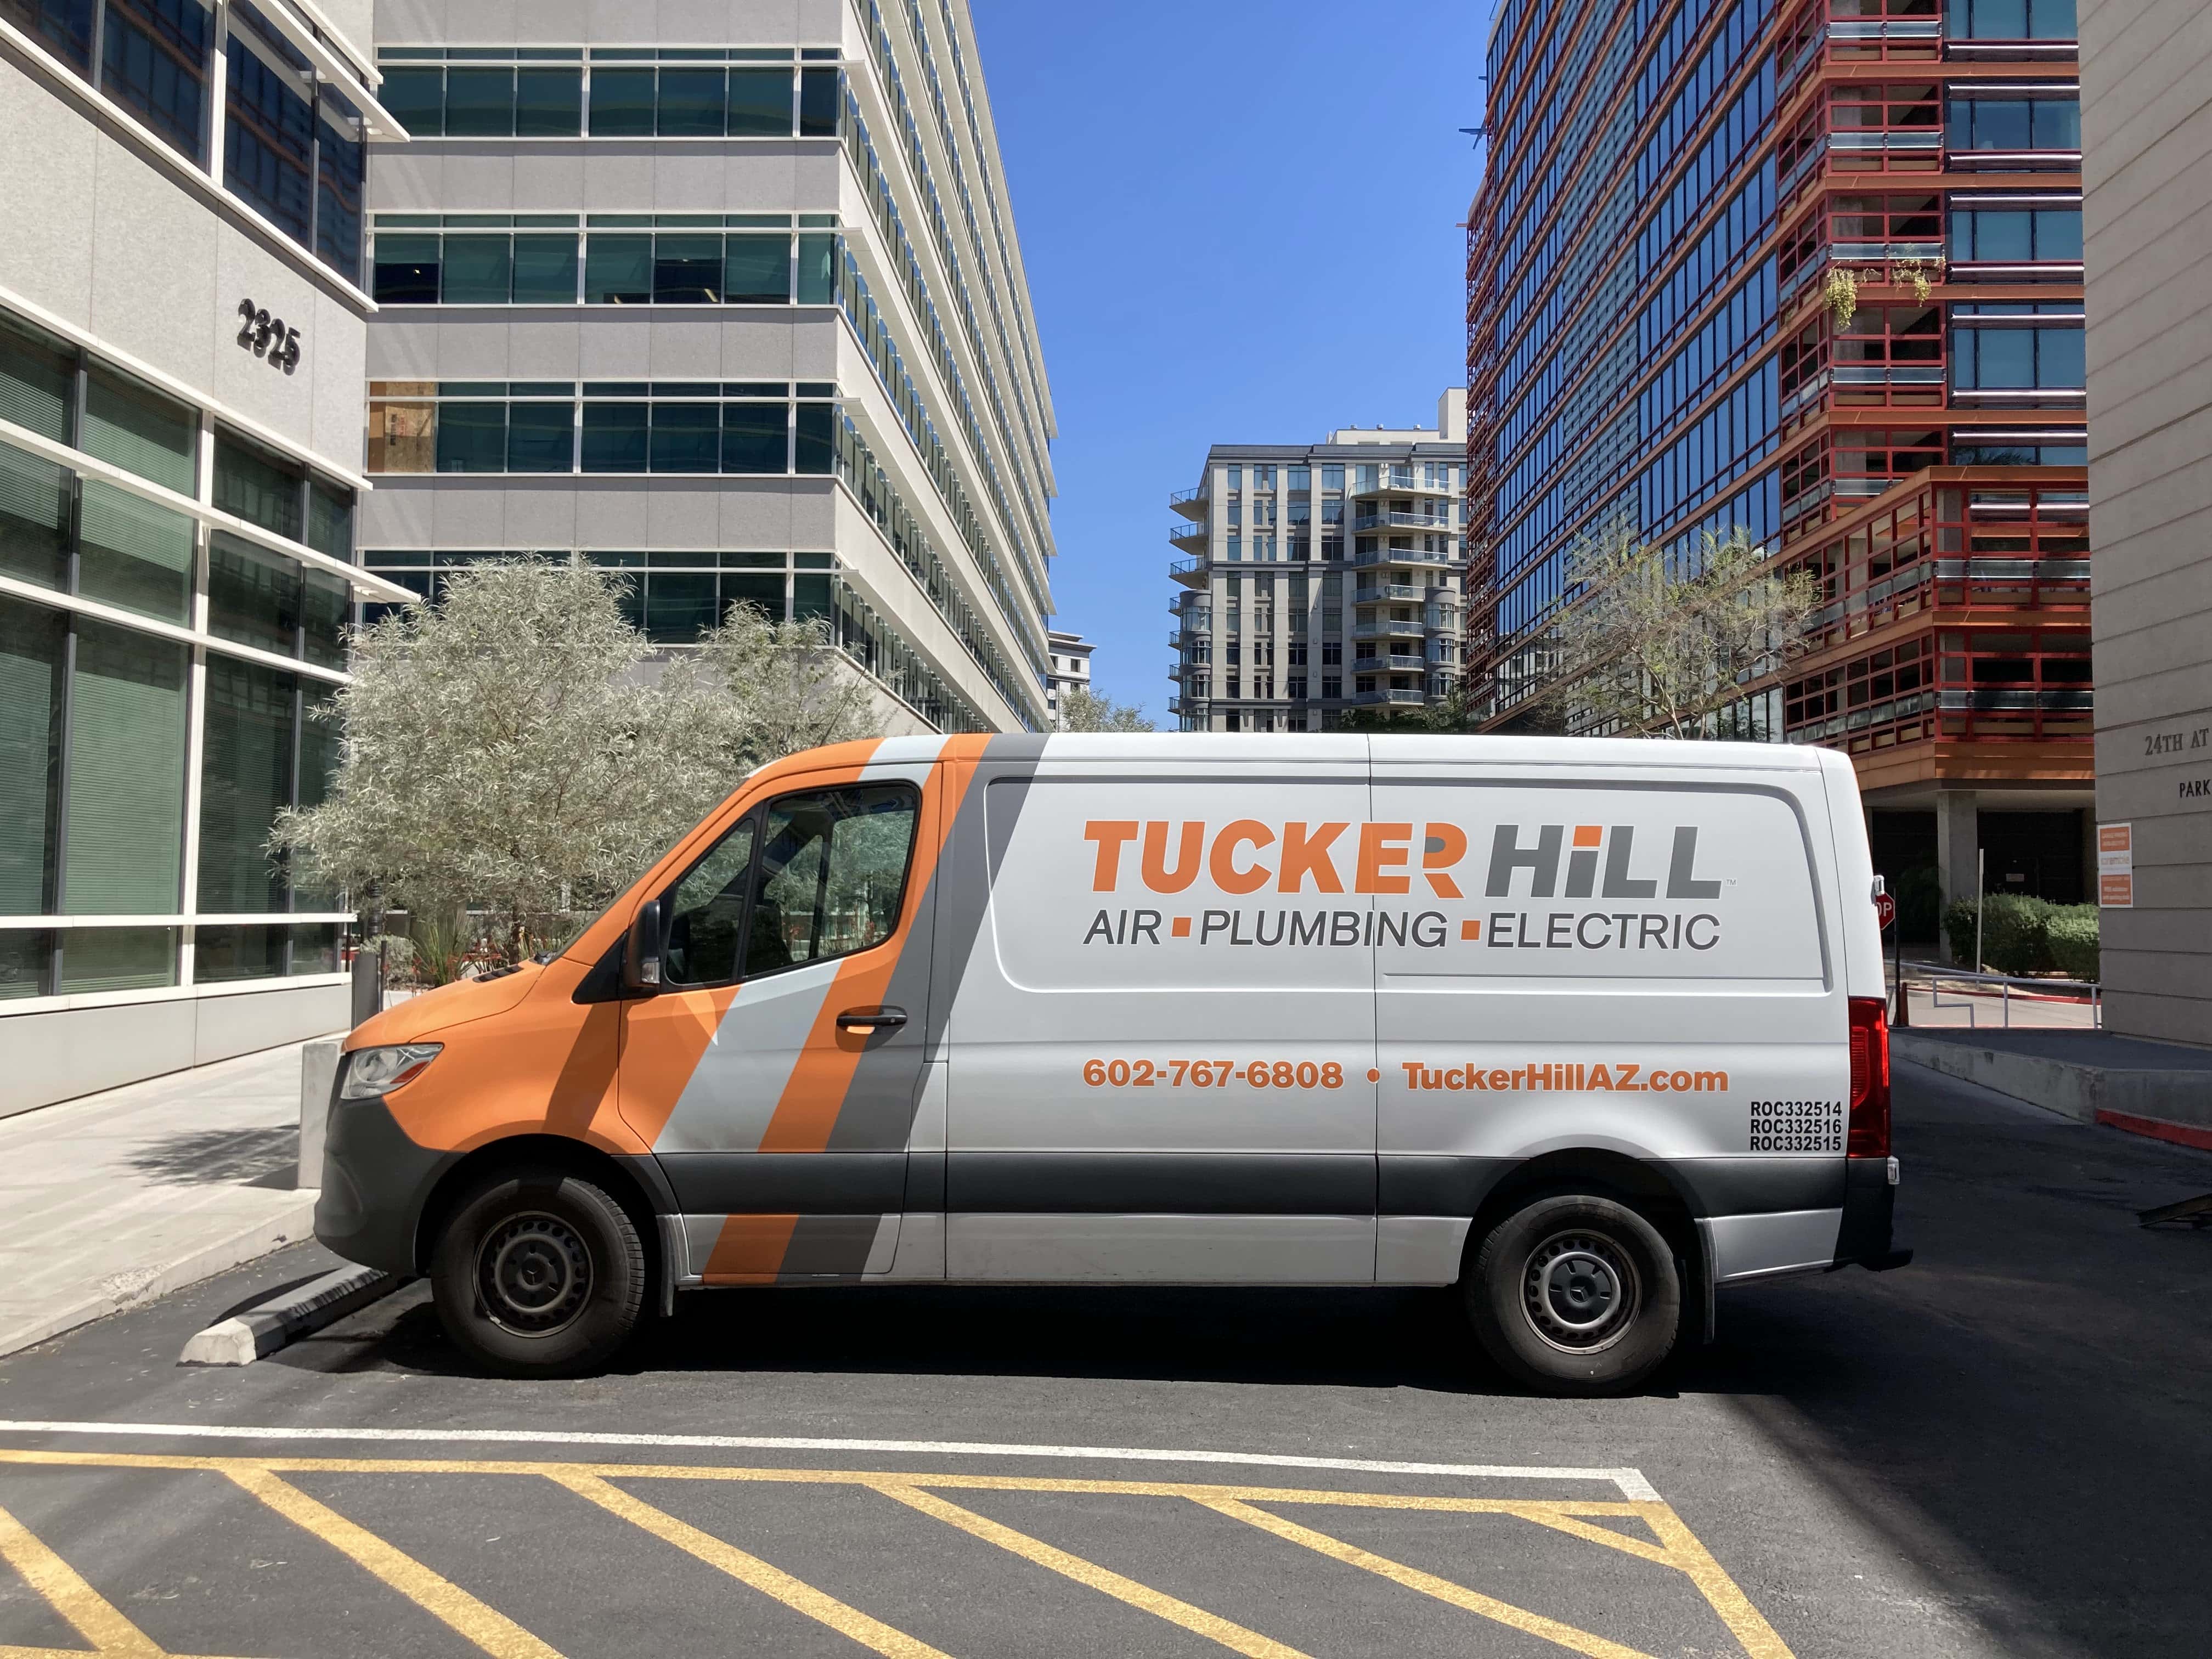 Tucker Hill Air, Plumbing and Electric - Phoenix, US, emergency plumber